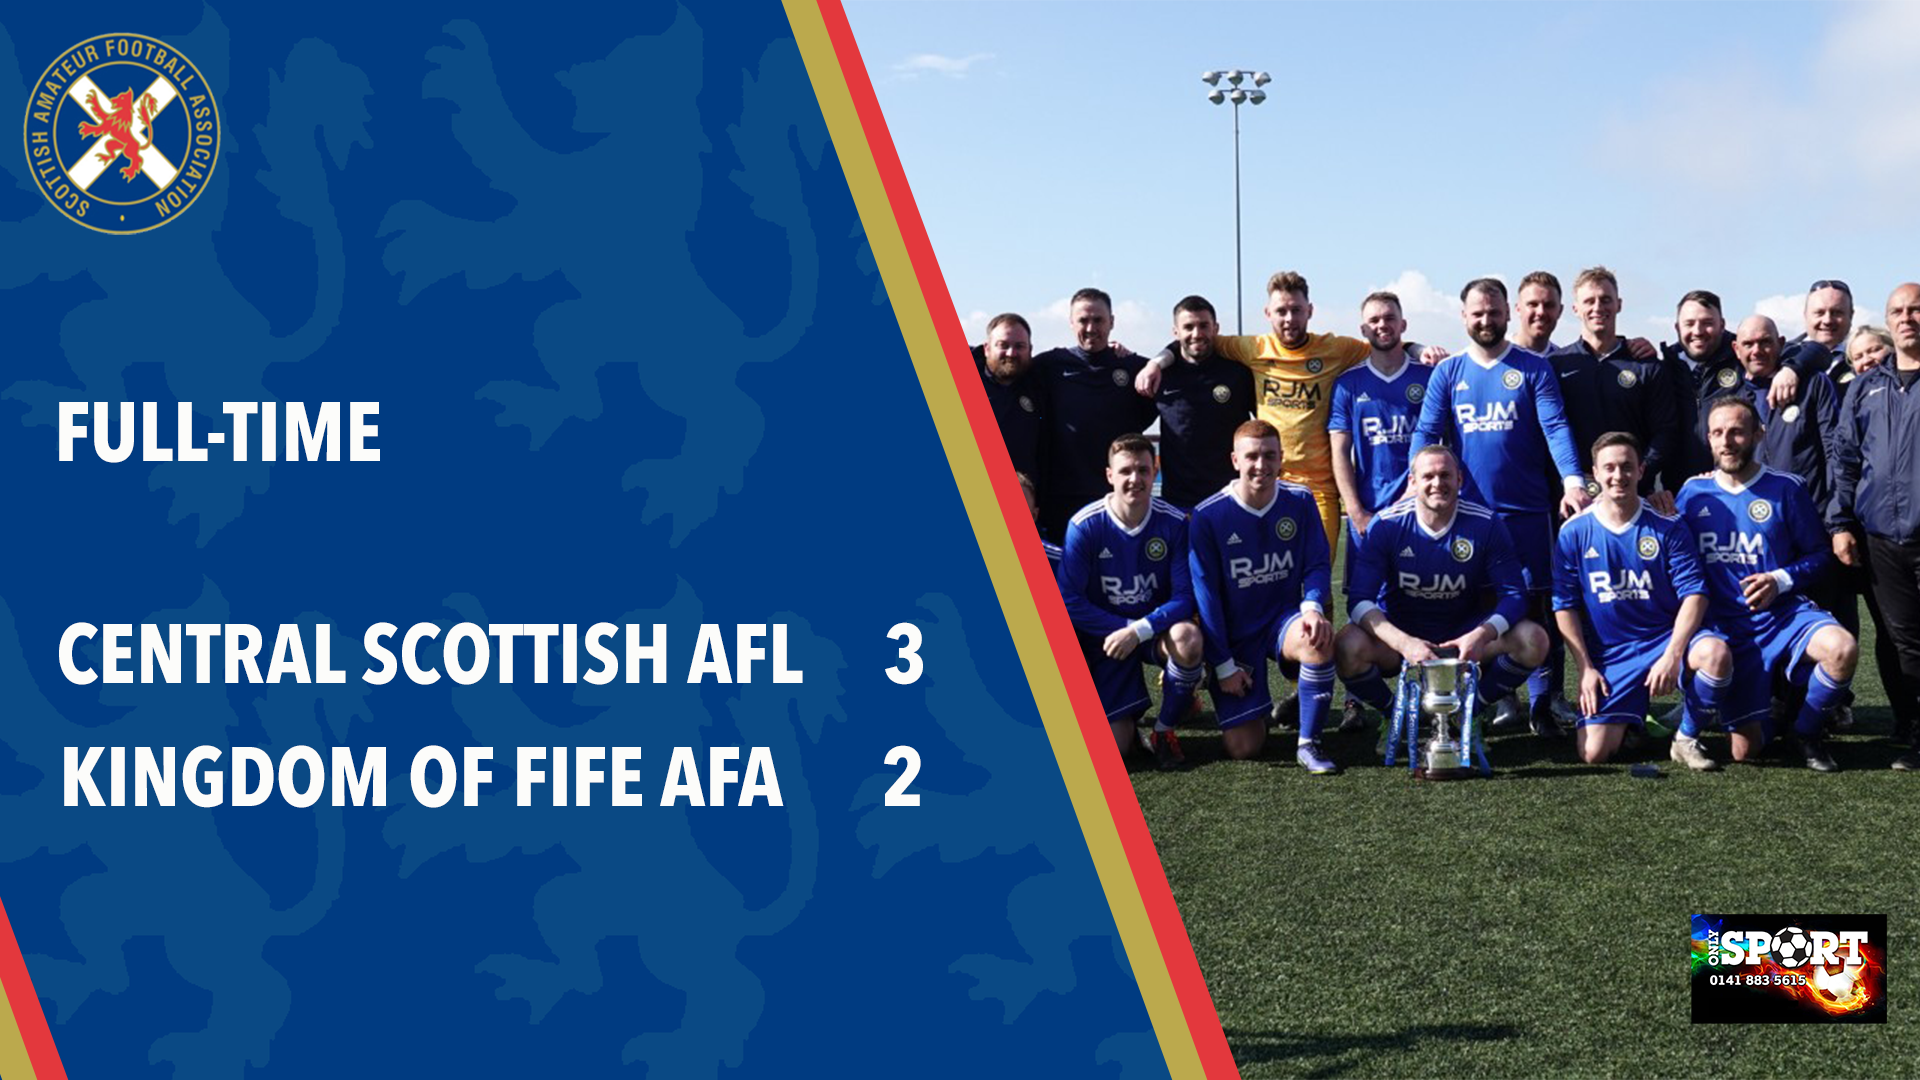 Central Scottish AFL Win 2019/20 Inter League Trophy